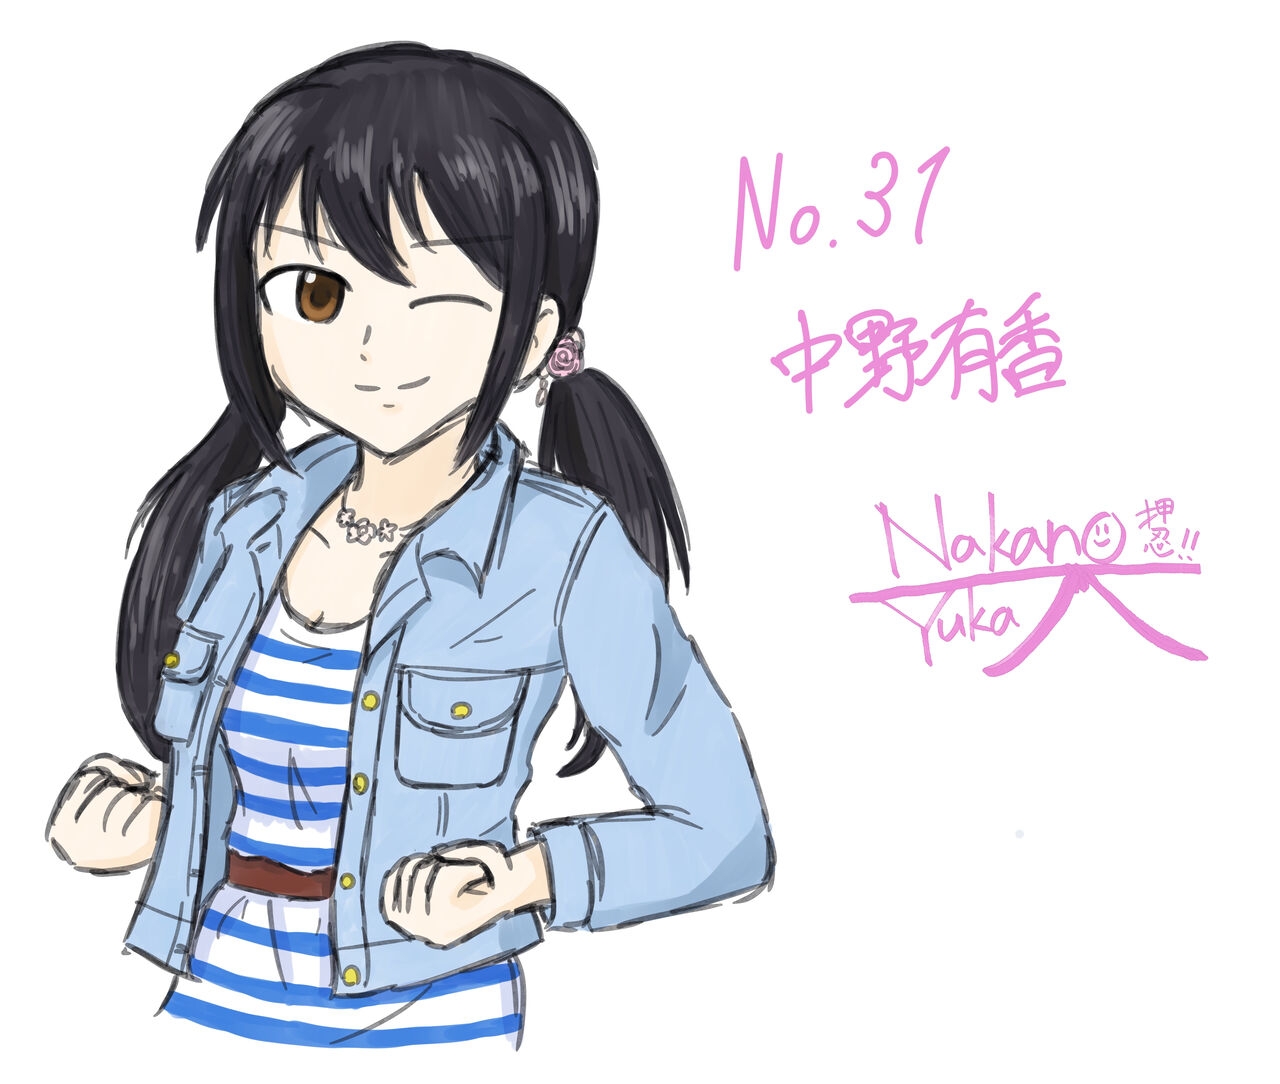 Idolmaster Character Fan Art Gallery - Yuka Nakano 84